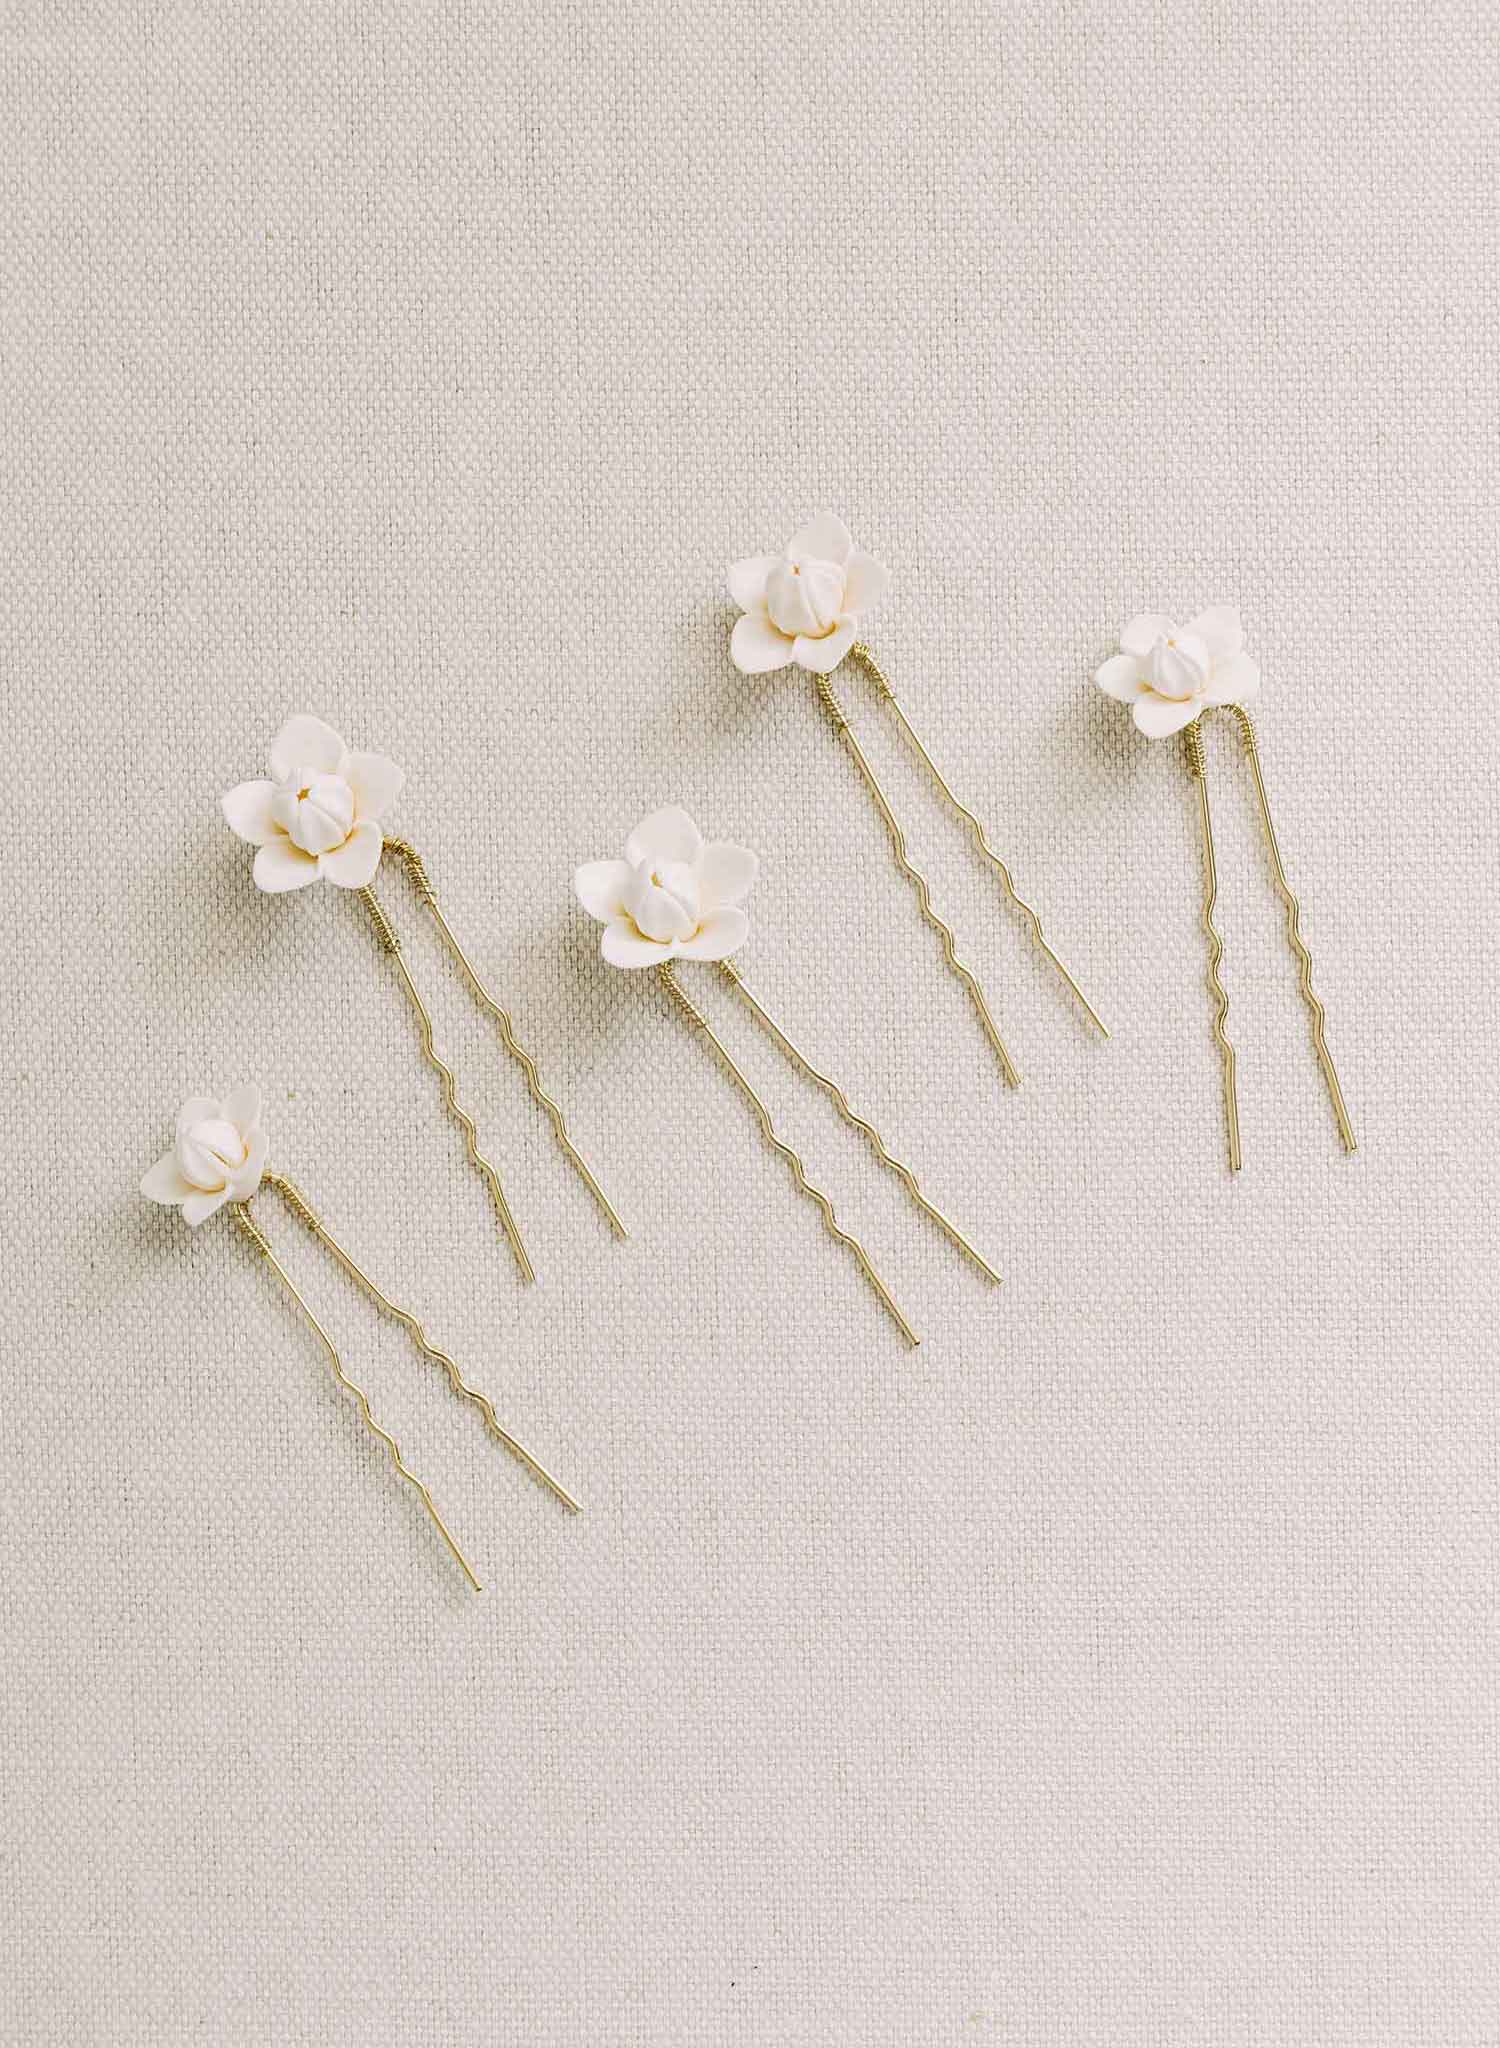 Floral bud bridal hair pin set of 5 - Style #2168